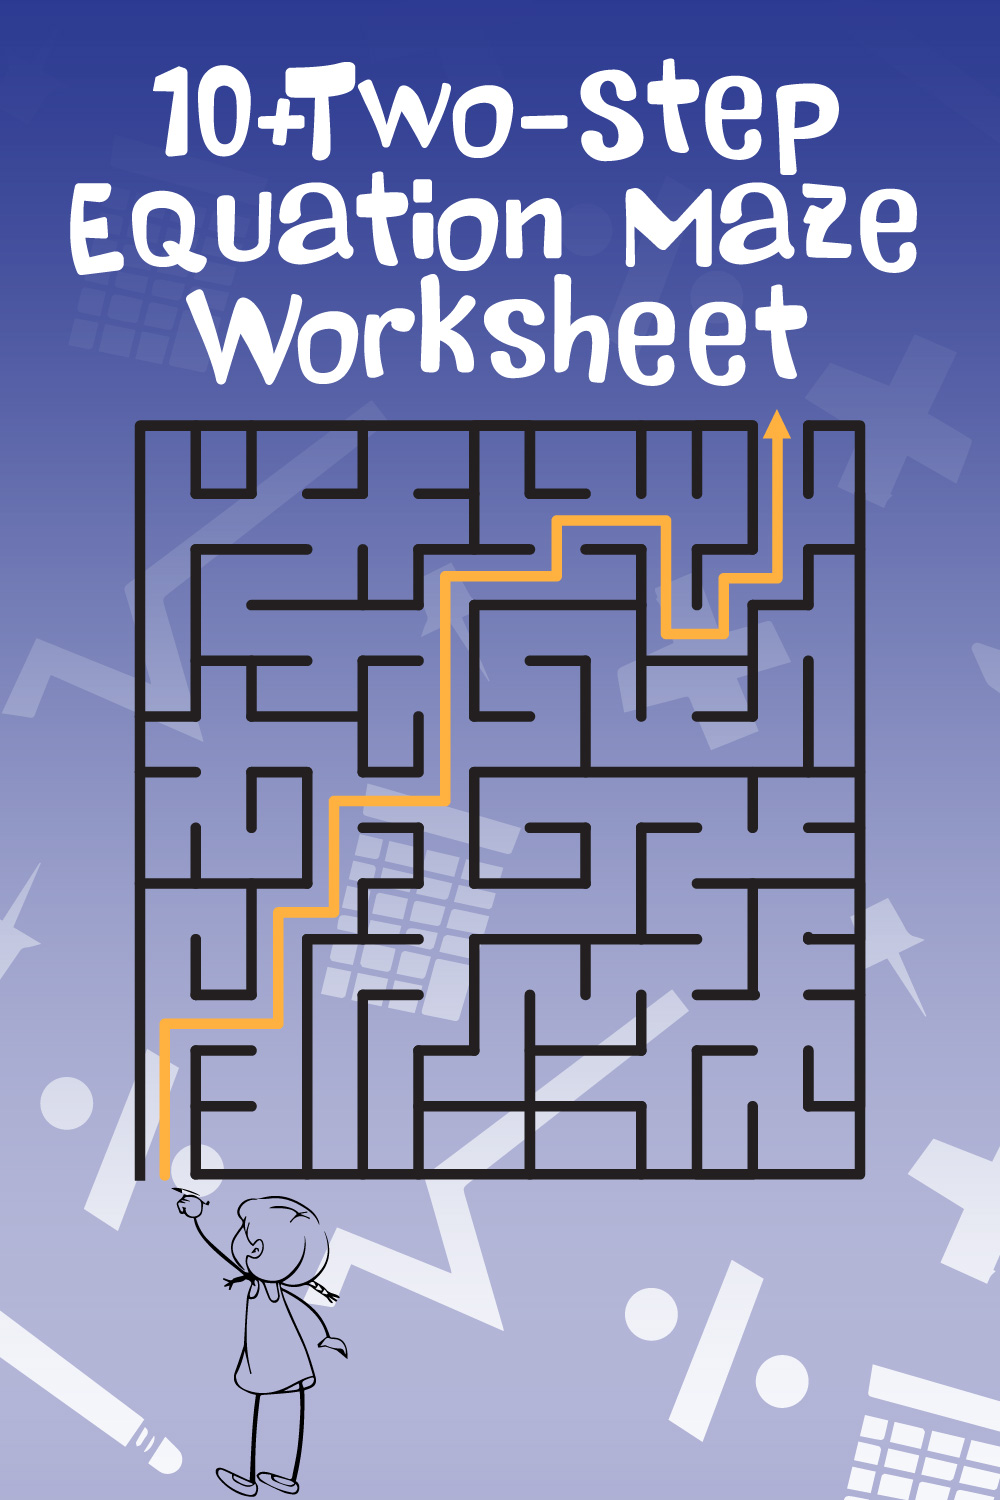 Two-Step Equation Maze Worksheet